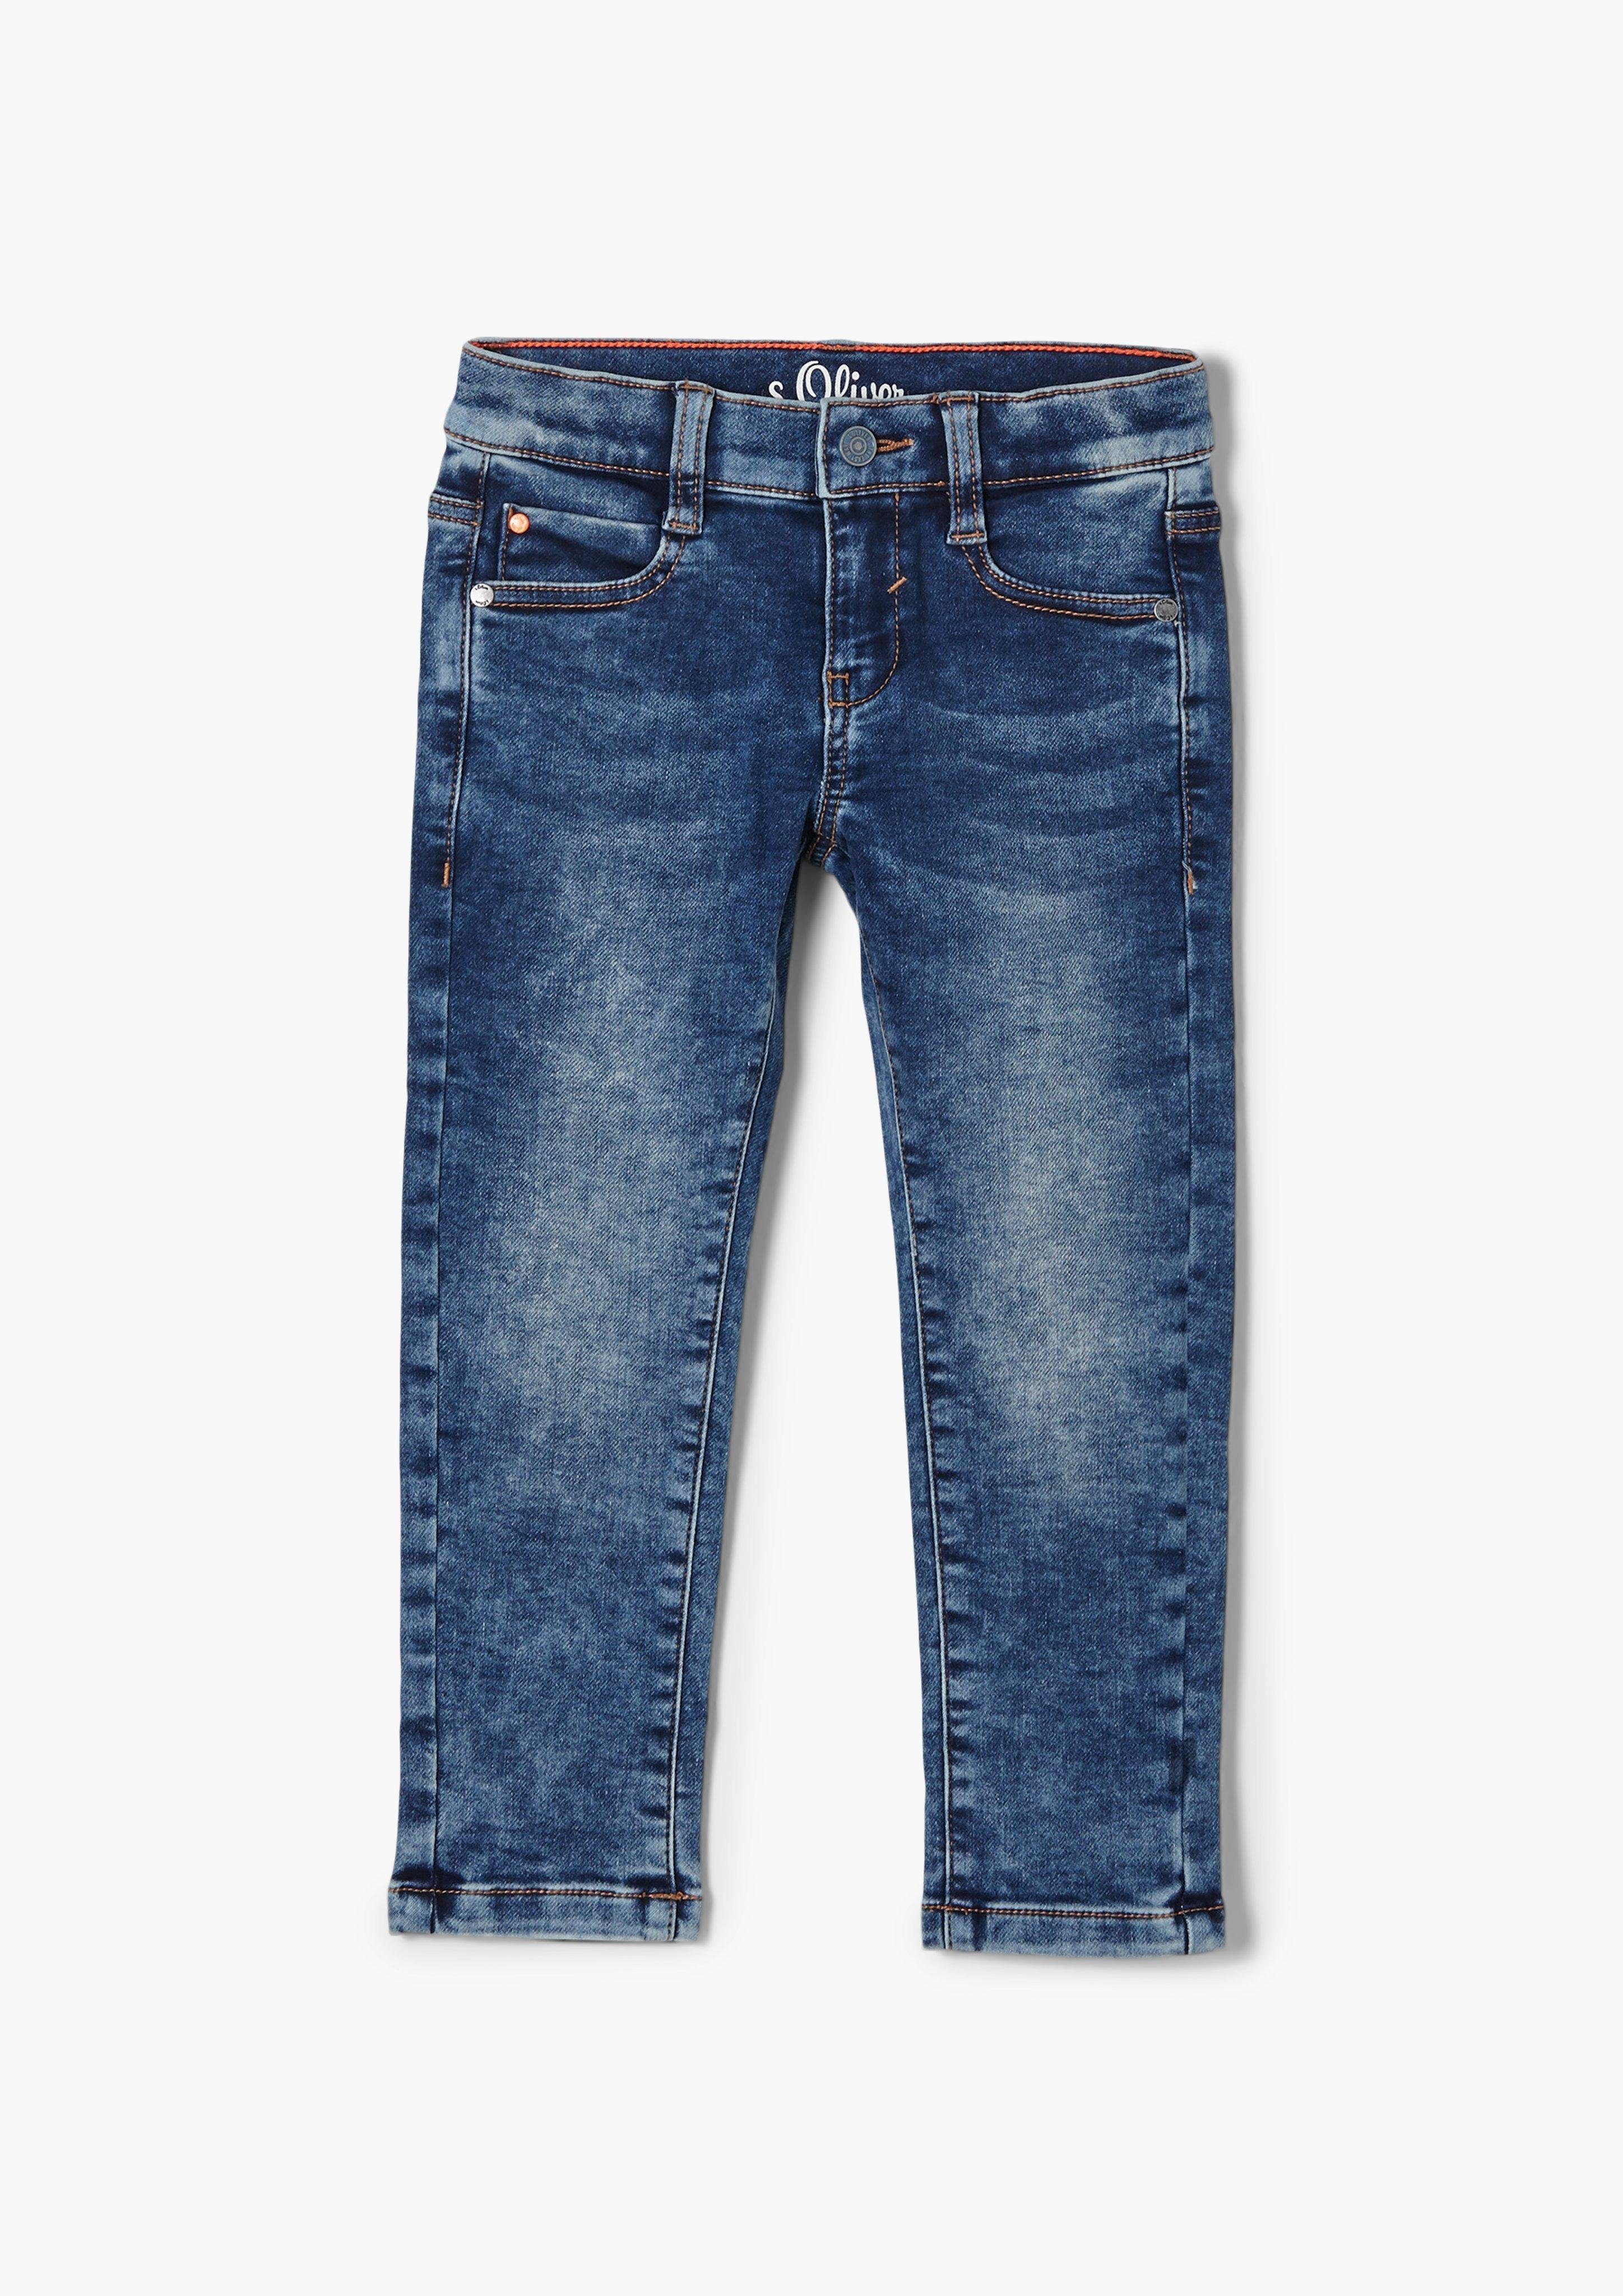 Mid / Jeans Waschung Fit Rise Brad s.Oliver Leg / / Slim Slim 5-Pocket-Jeans